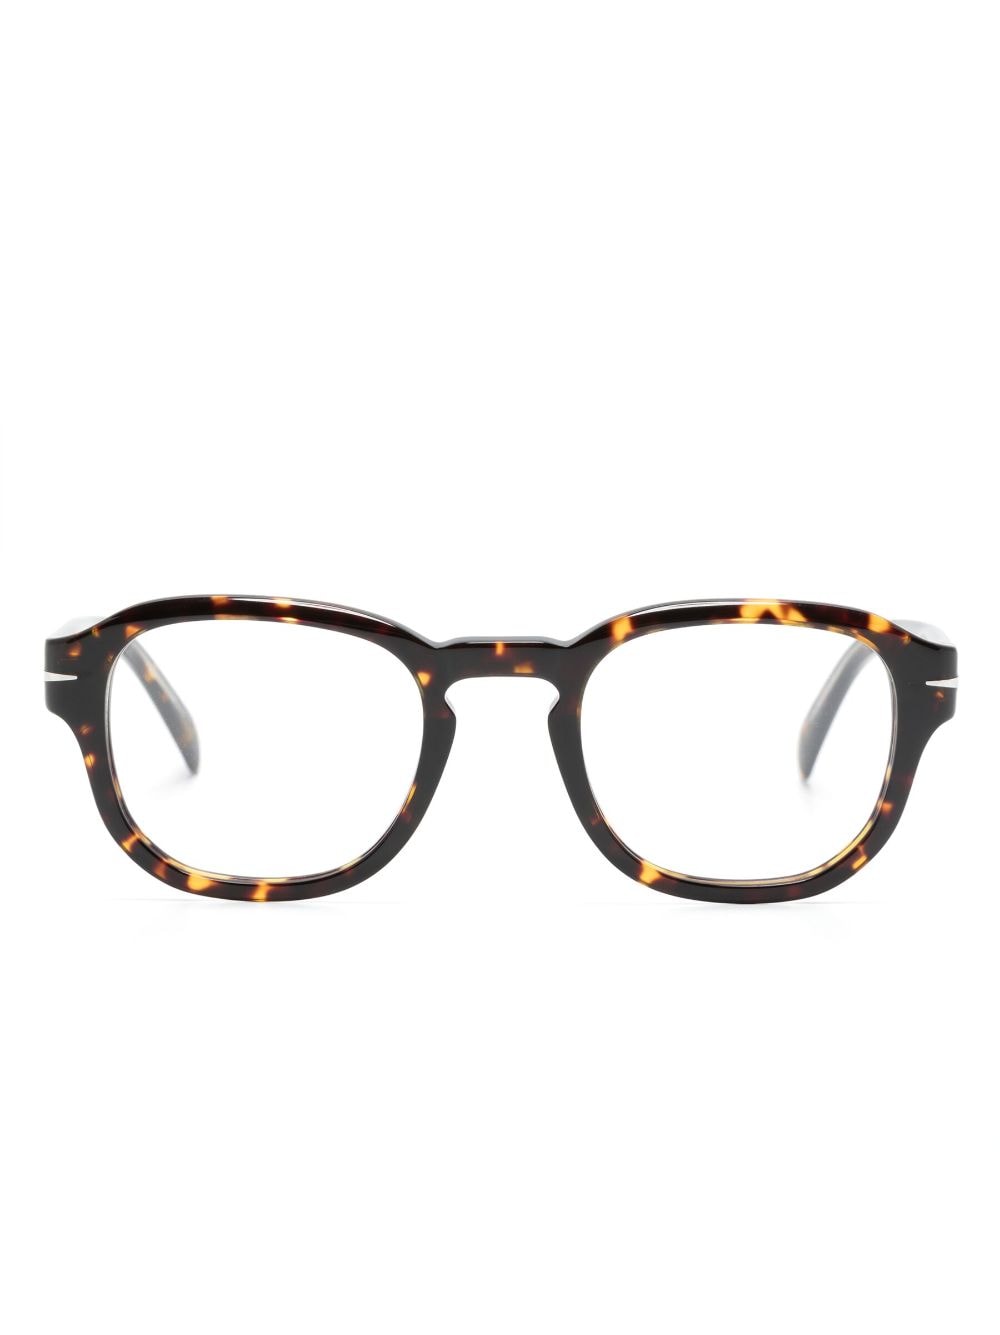 Image 1 of Eyewear by David Beckham tortoiseshell round-frame glasses